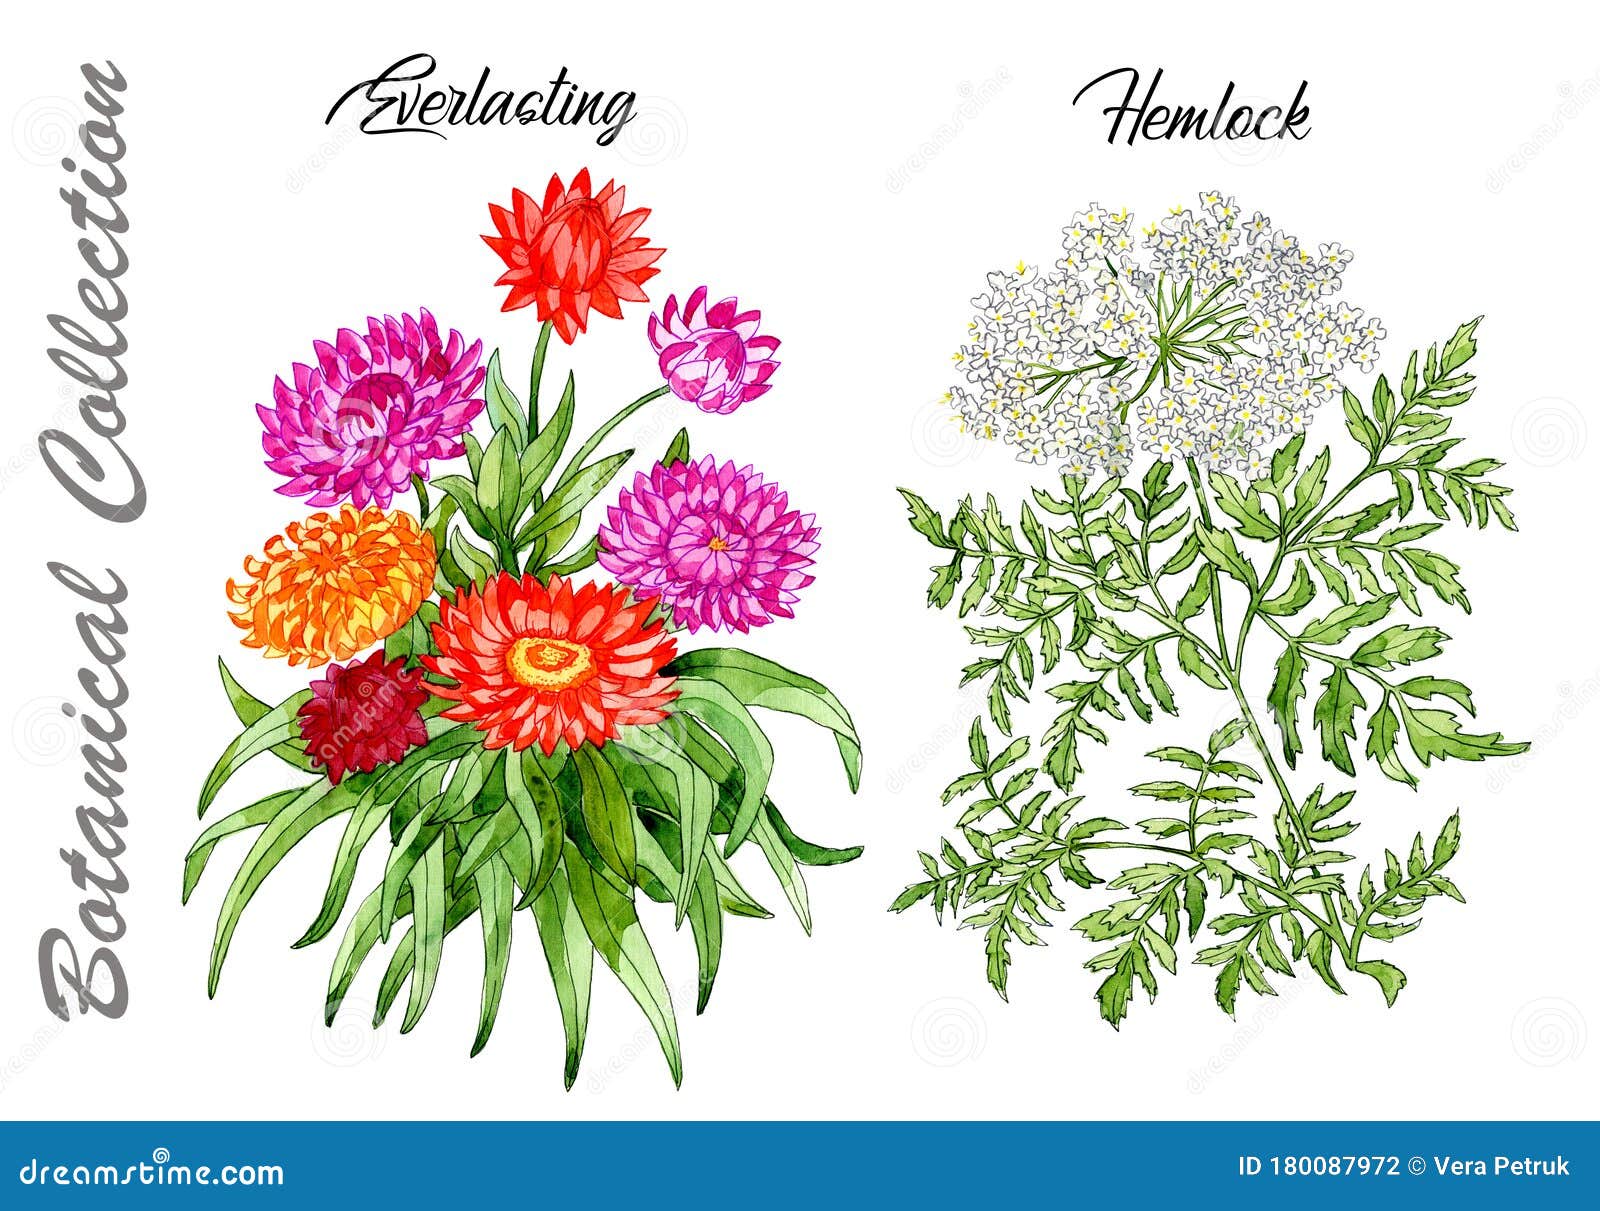  set of everlasting and hemlock flowers  on white